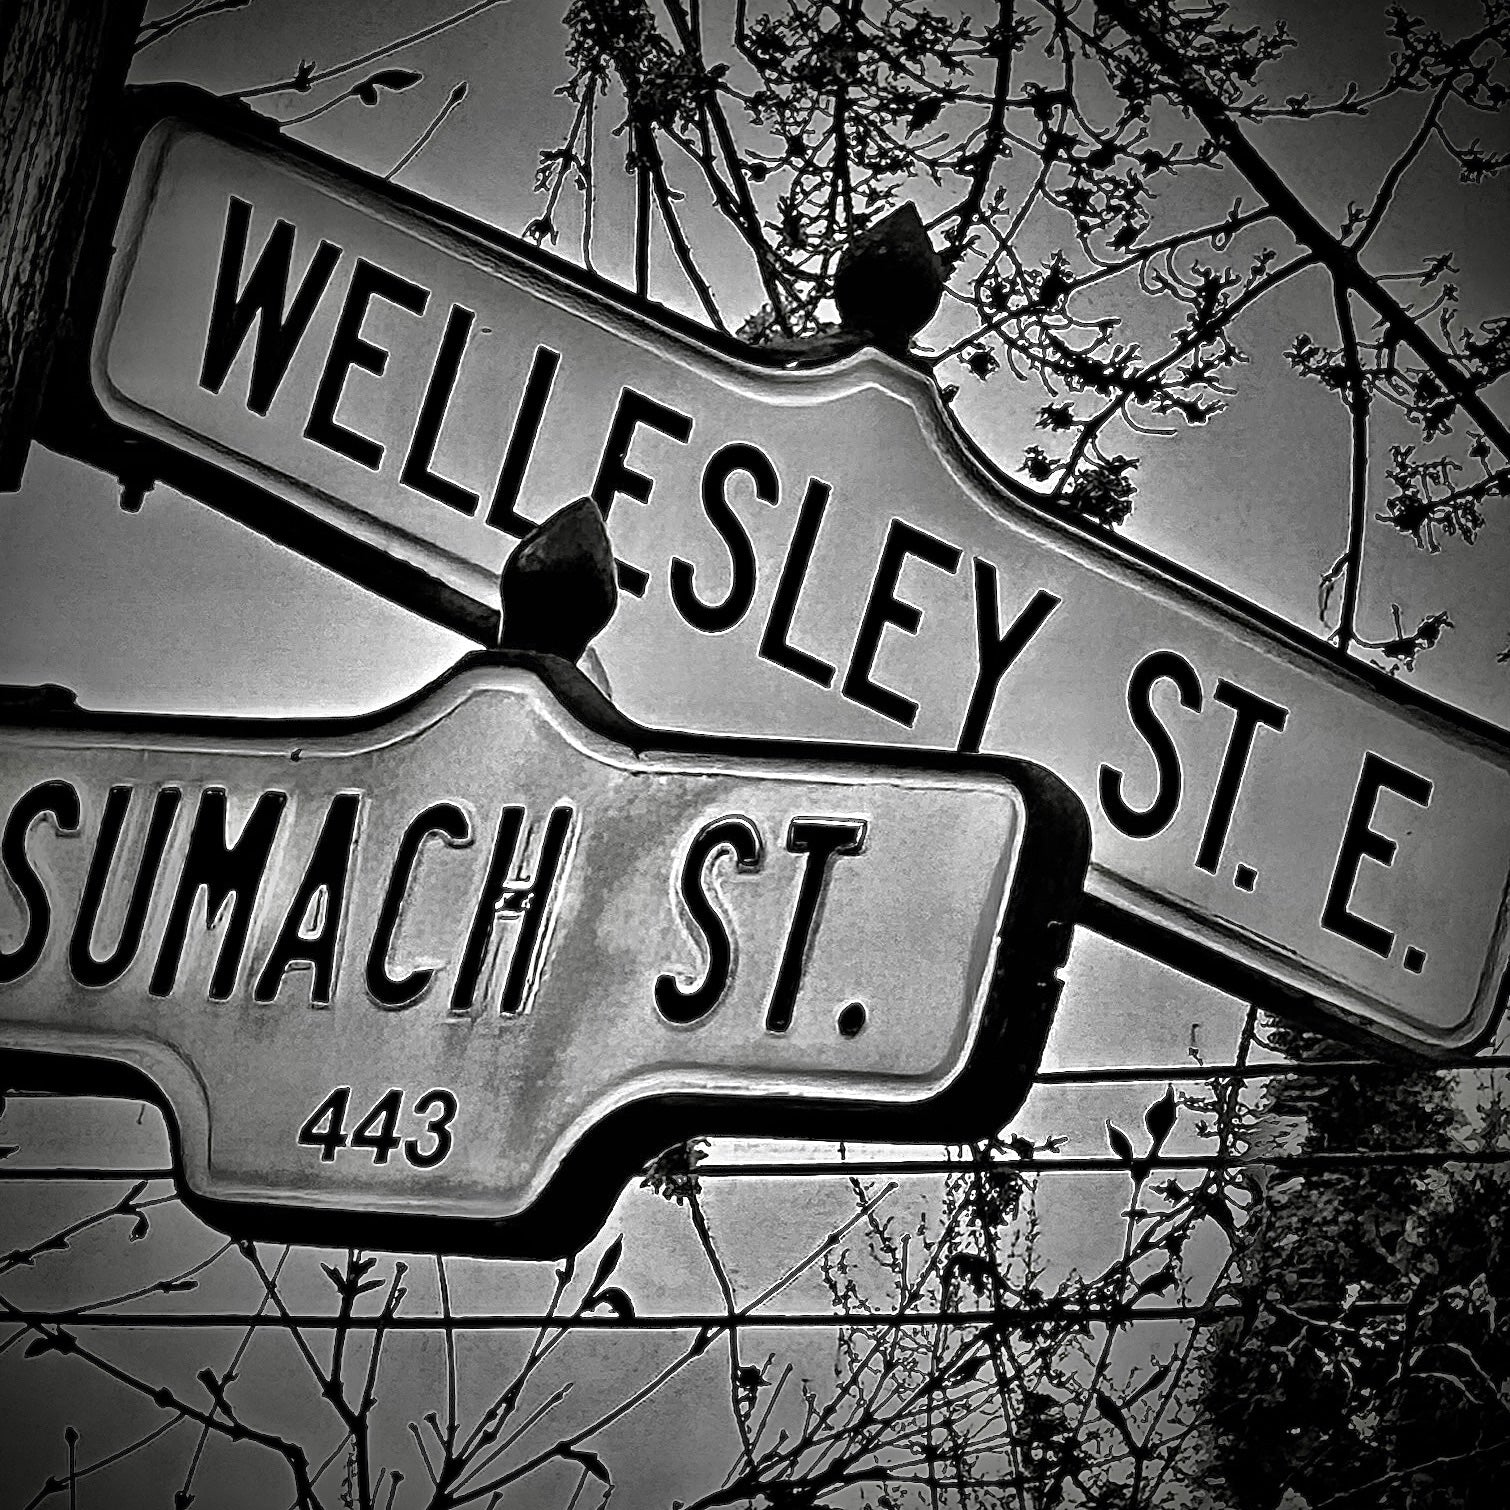 Wellesley & Sumach- Ceramic Coaster